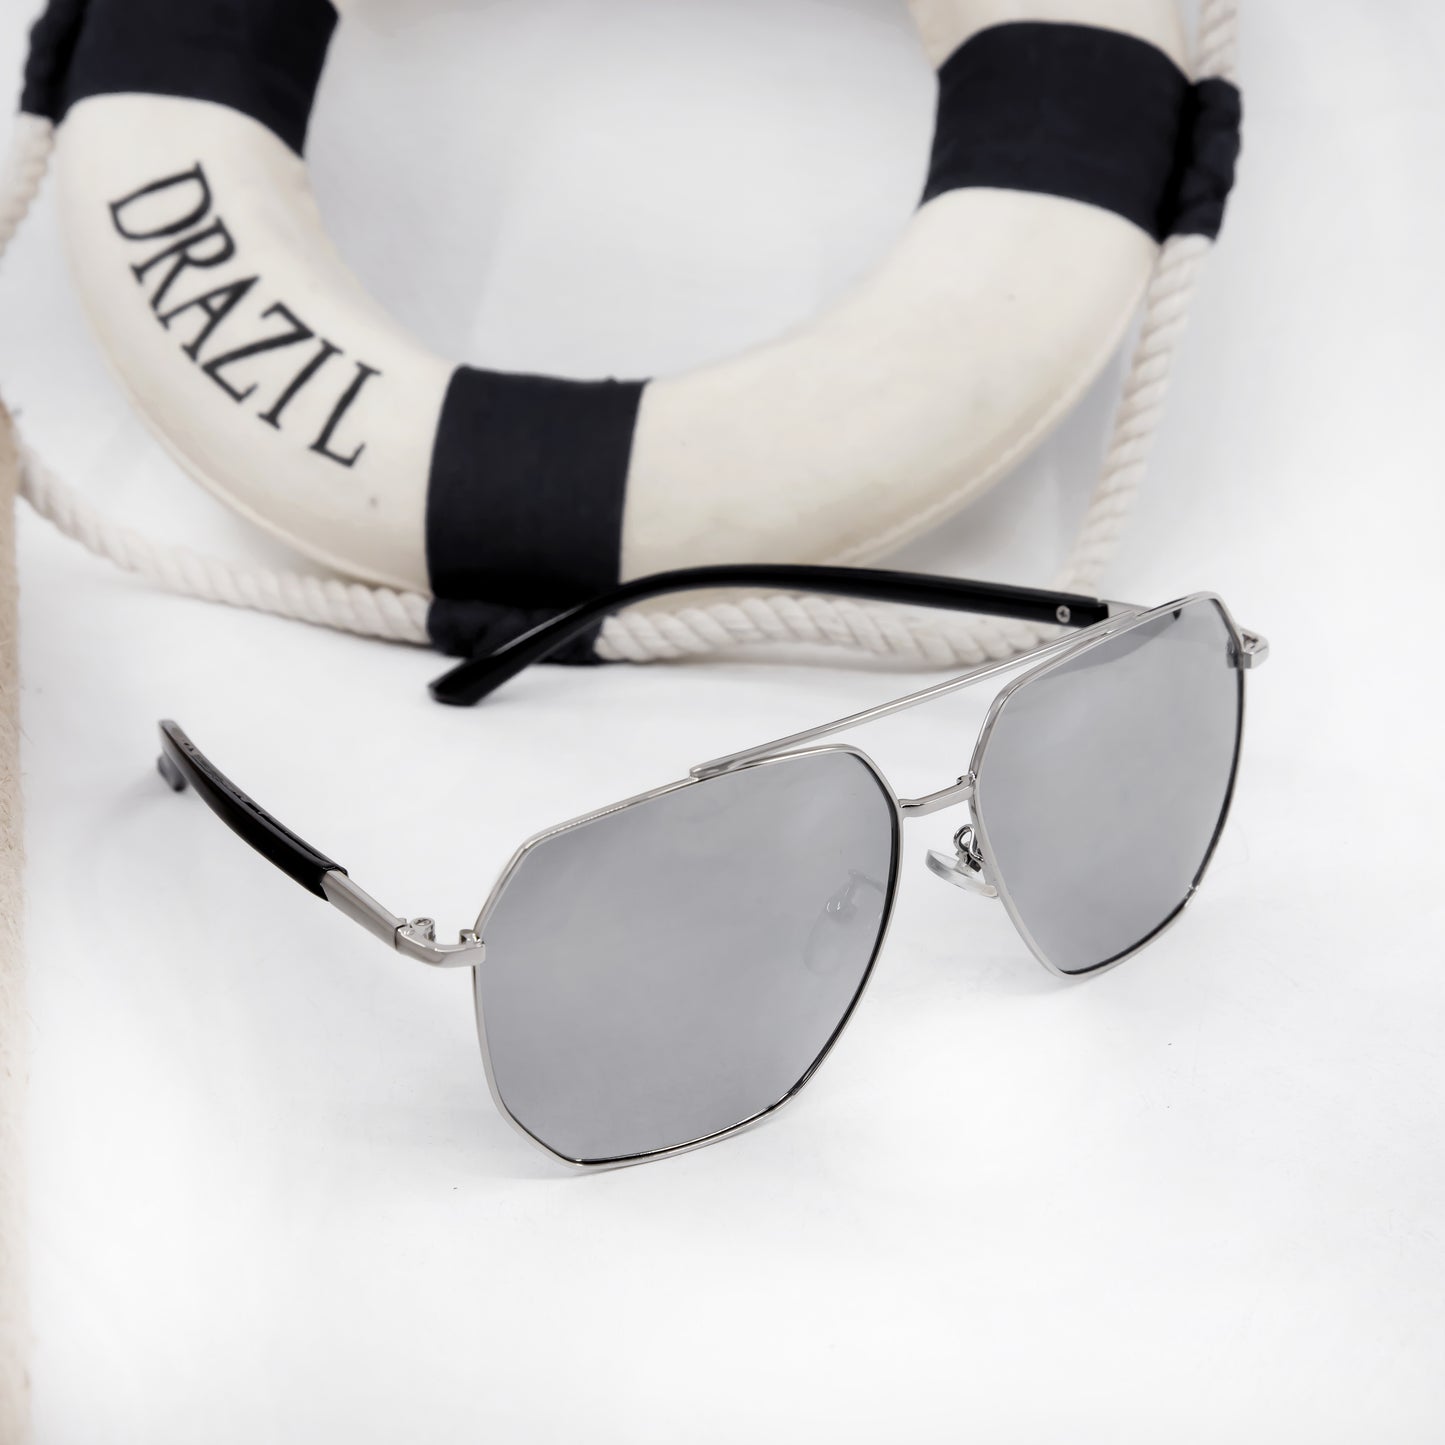 MT Mastar Silver And Silver Unisex Sunglasses